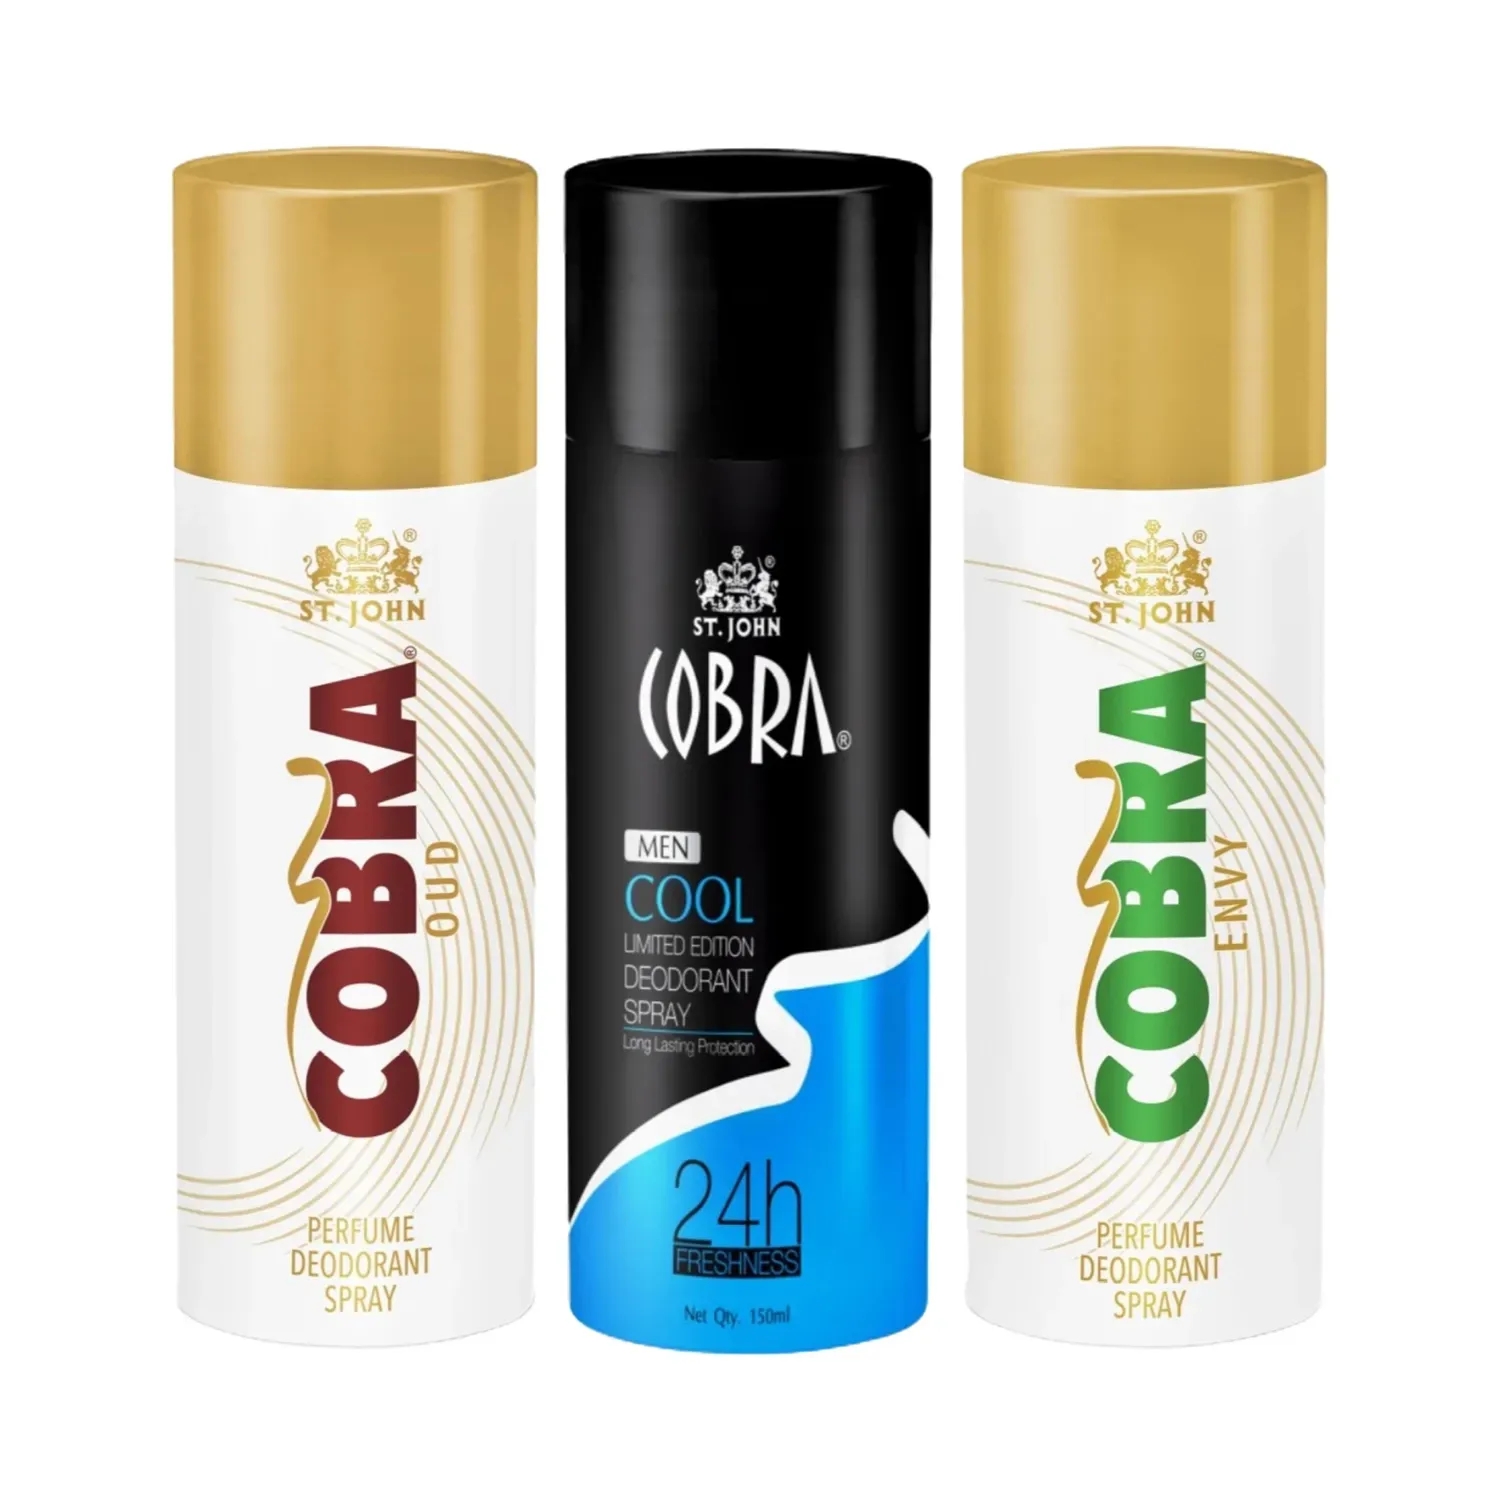 ST.JOHN Cobra Cool, Envy And Oud Limited Edition Deodorant Spray (3 Pcs)